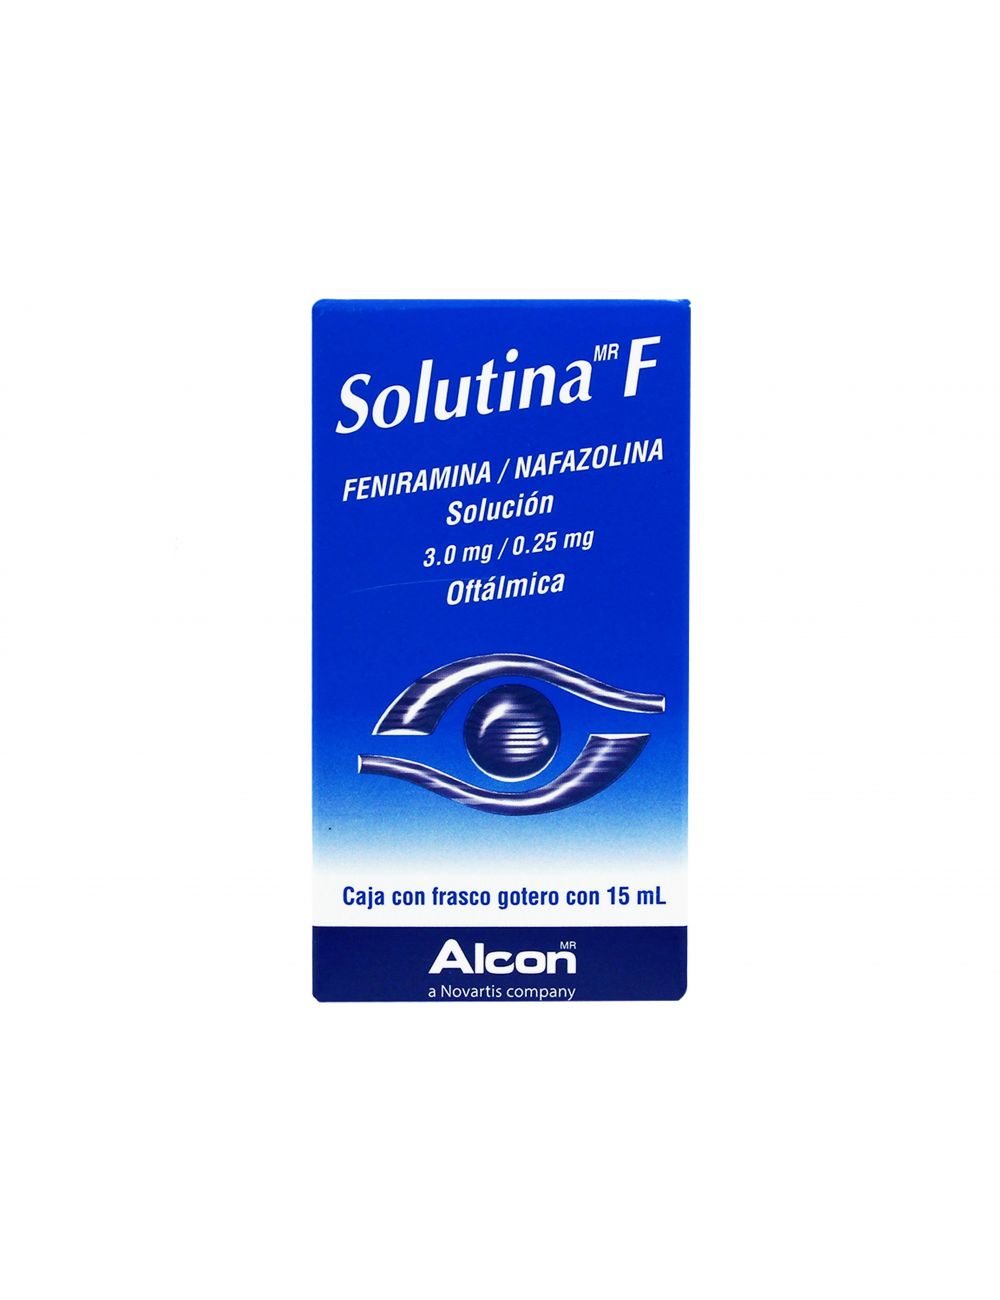 Solutina F 15 mL Frasco Gotero